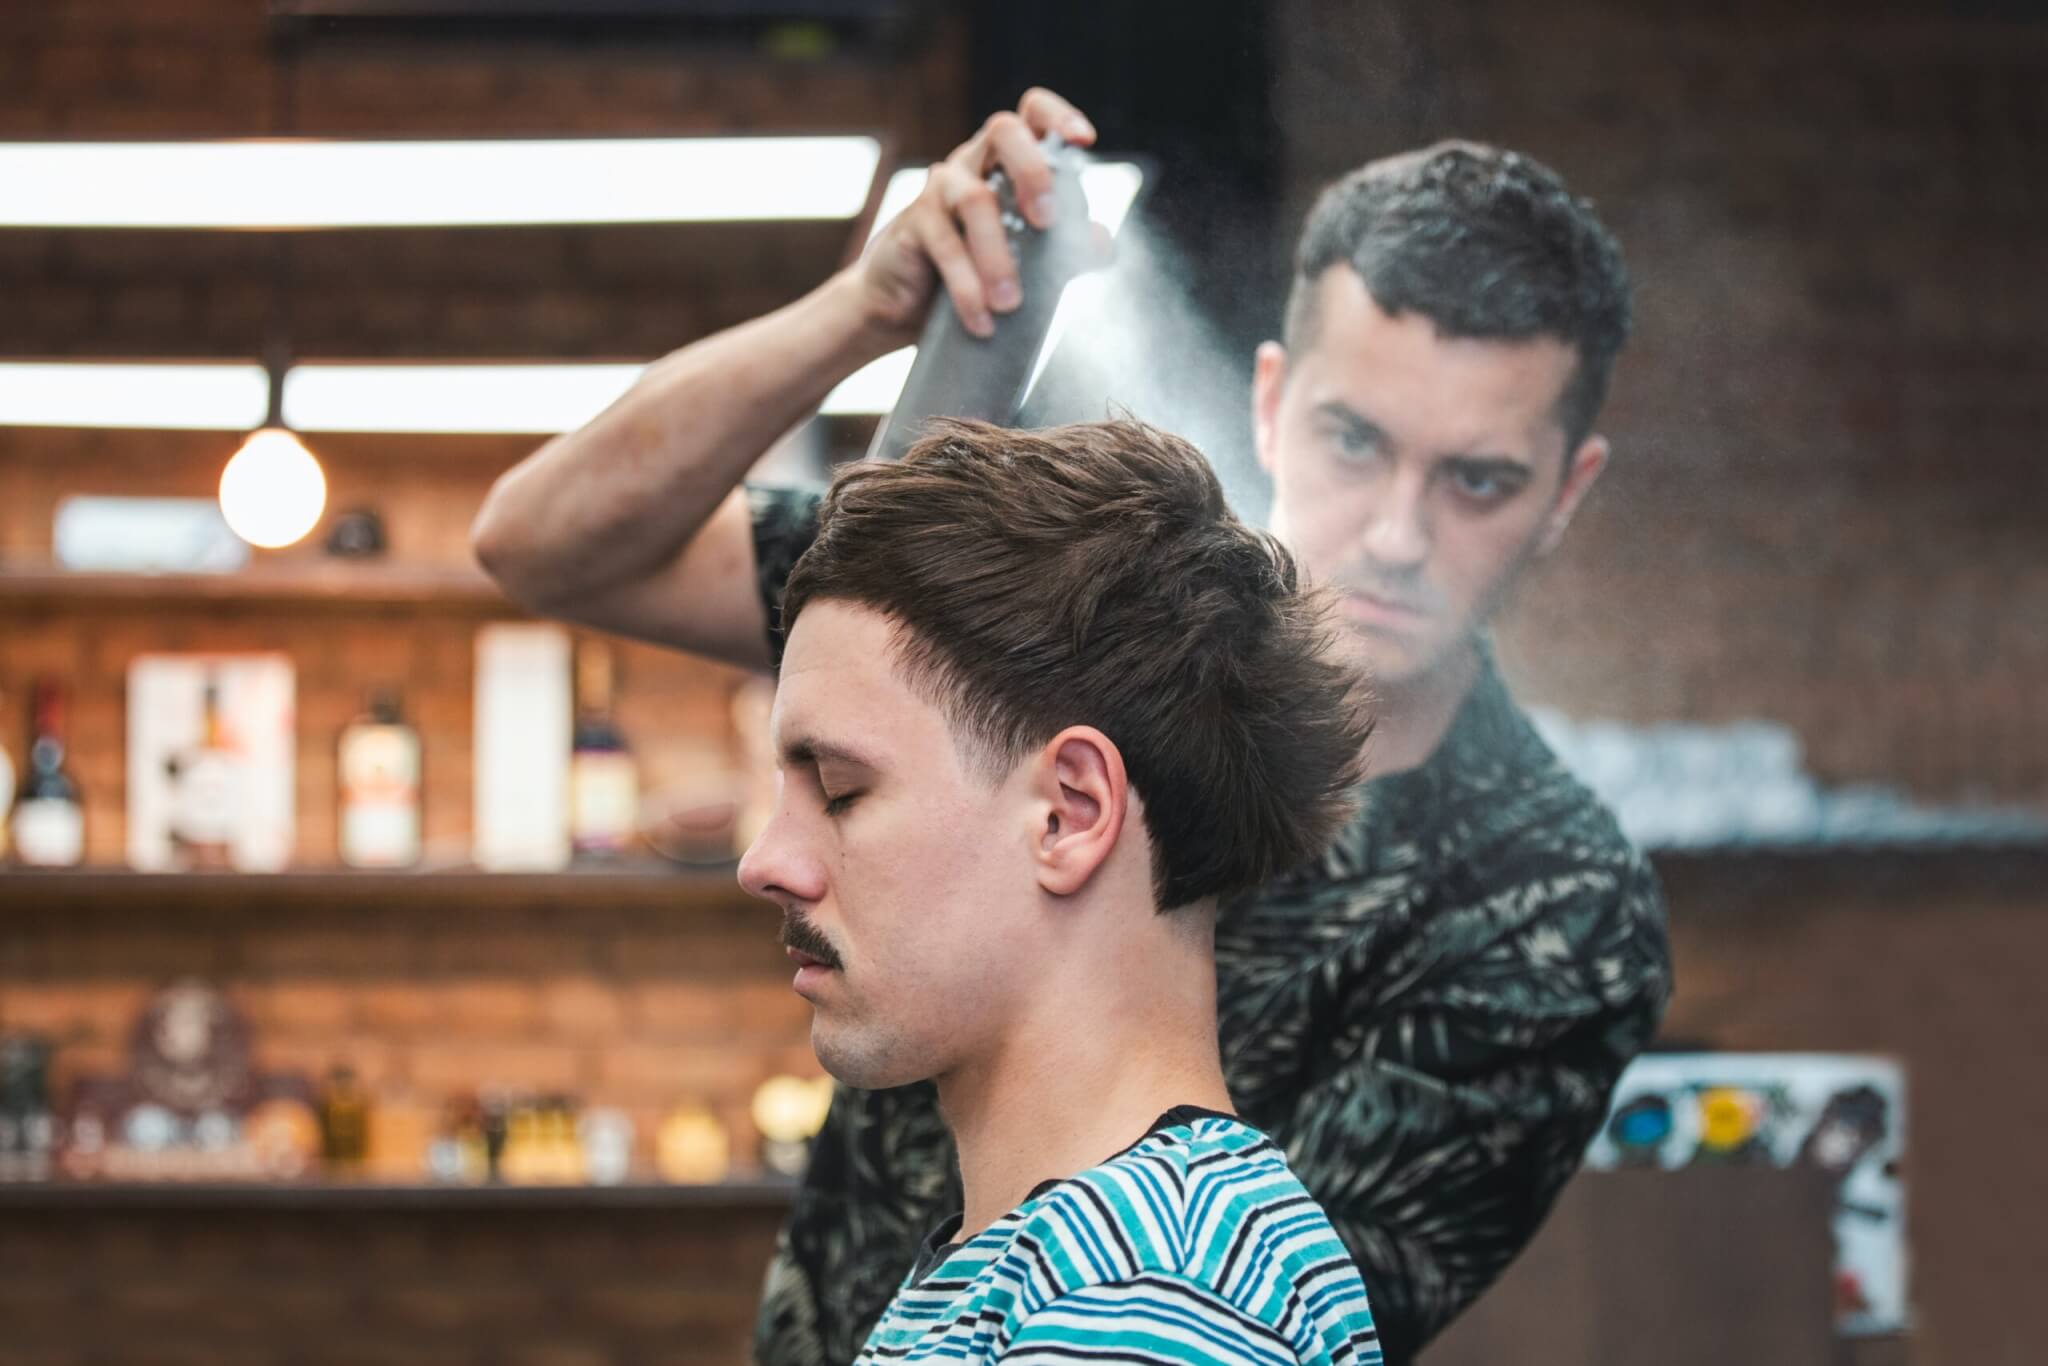 Stylist using hairspray while cutting man's hair